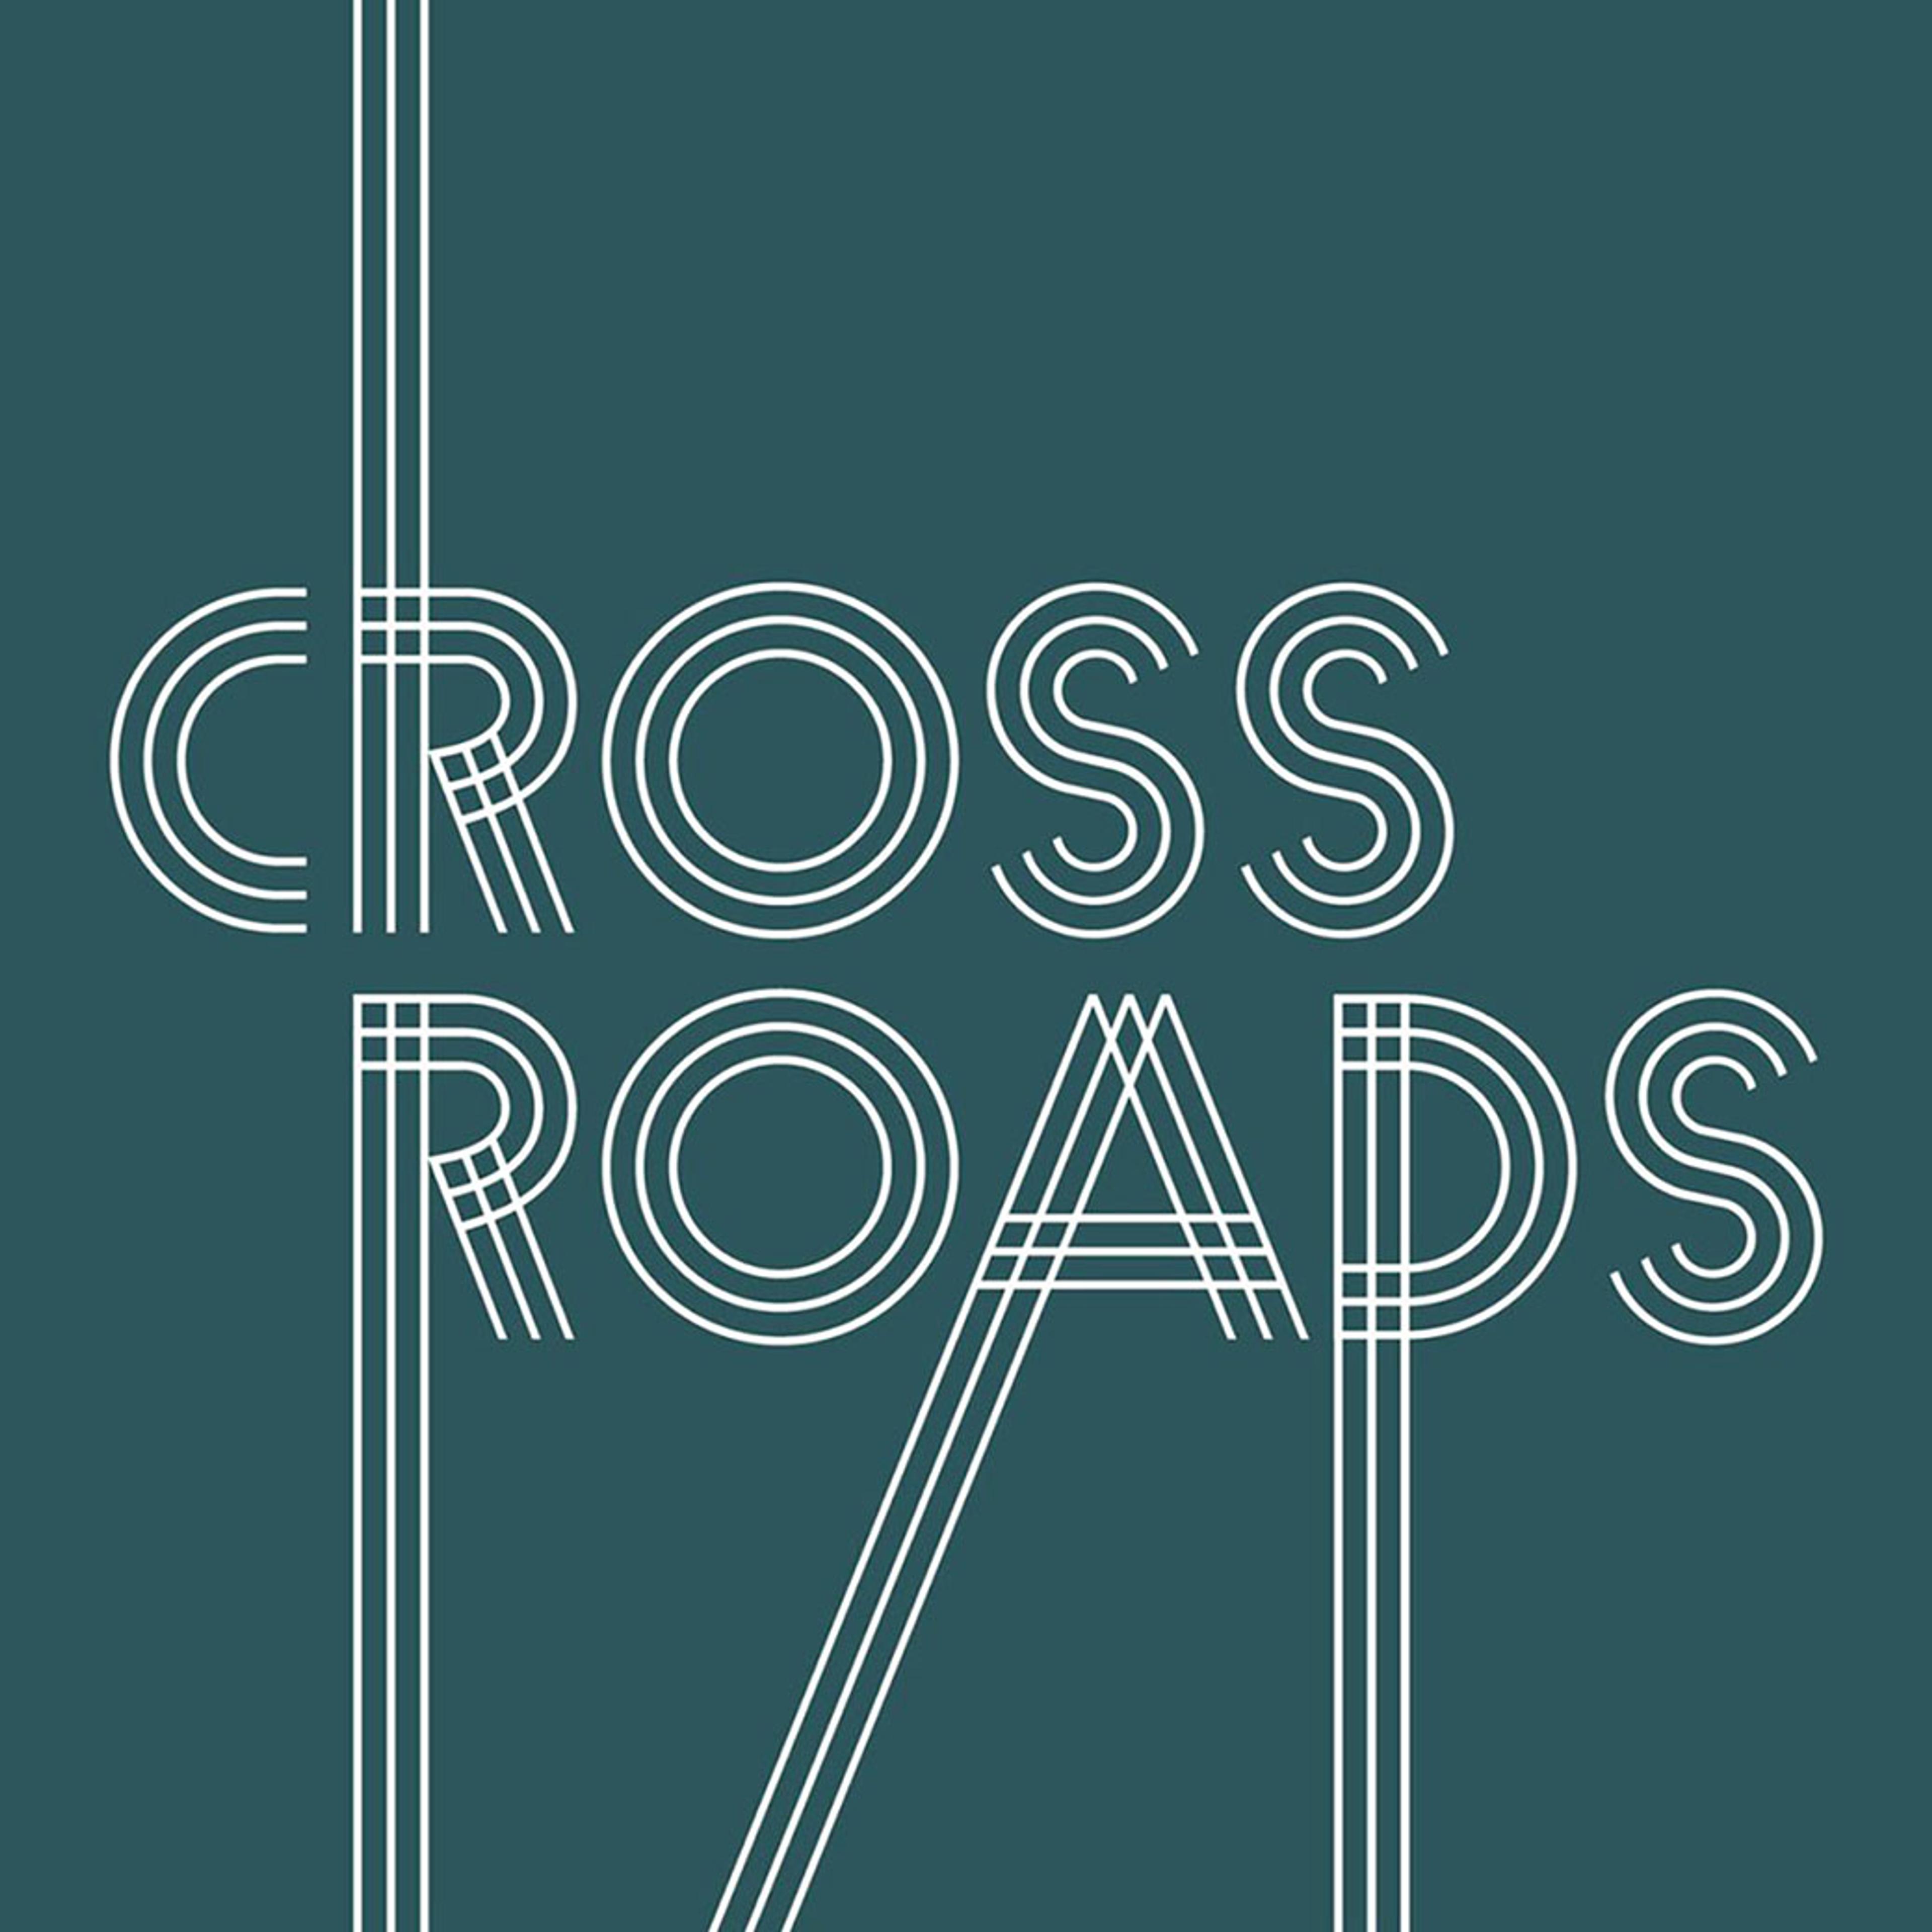 Crossroads - The Metropolitan Museum of Art